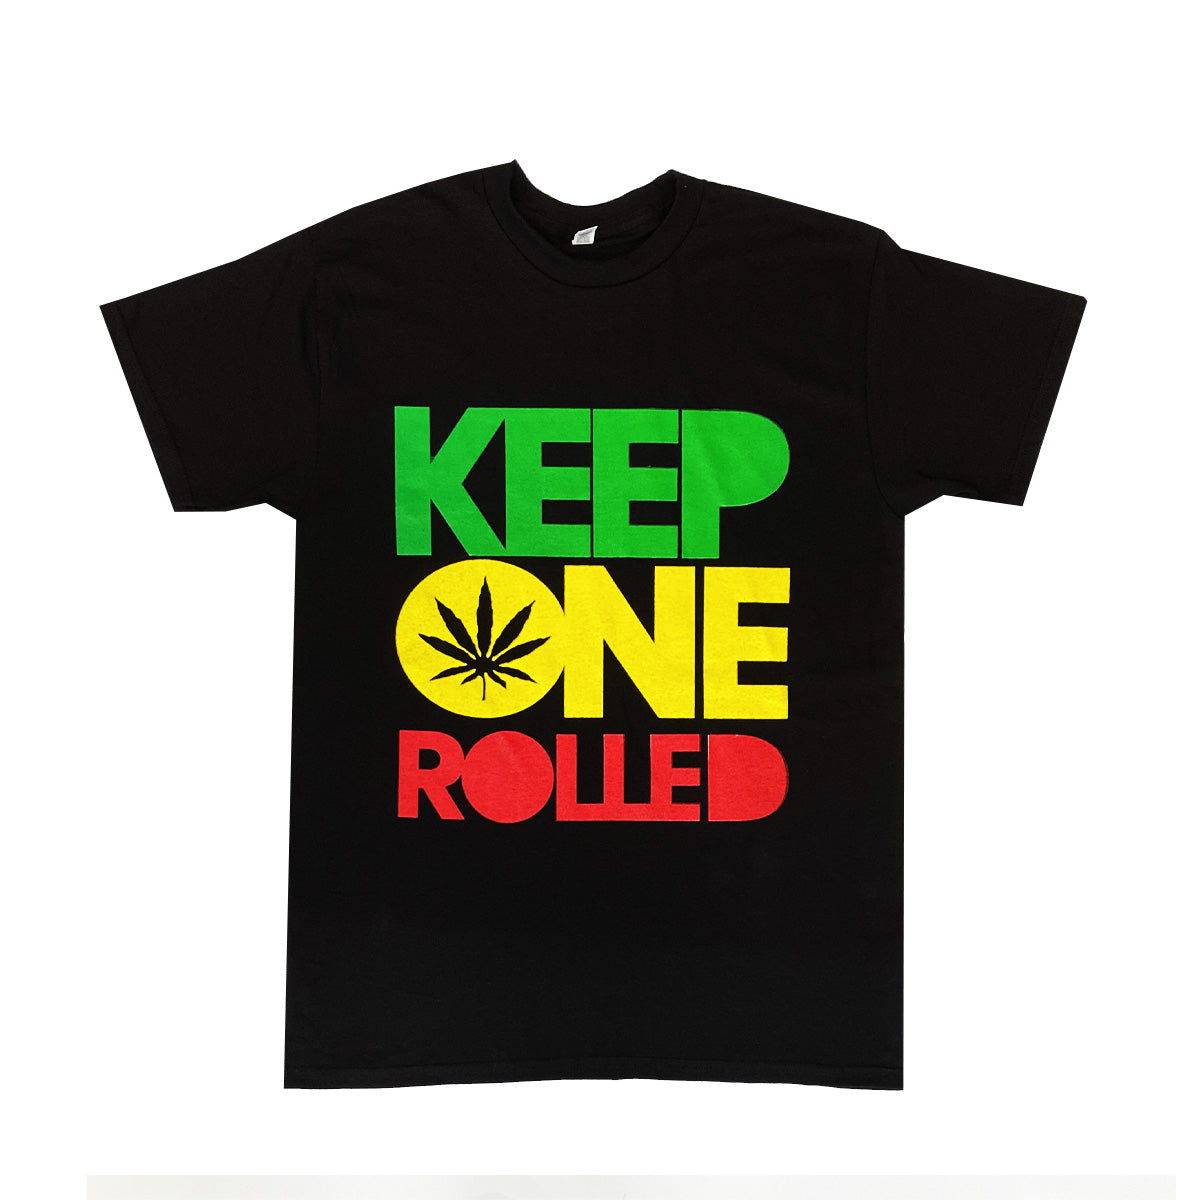 Keep One Rolled 100% Cotton T-Shirt, Pack of 5 Units, M, L, XL, XXL, XXXL